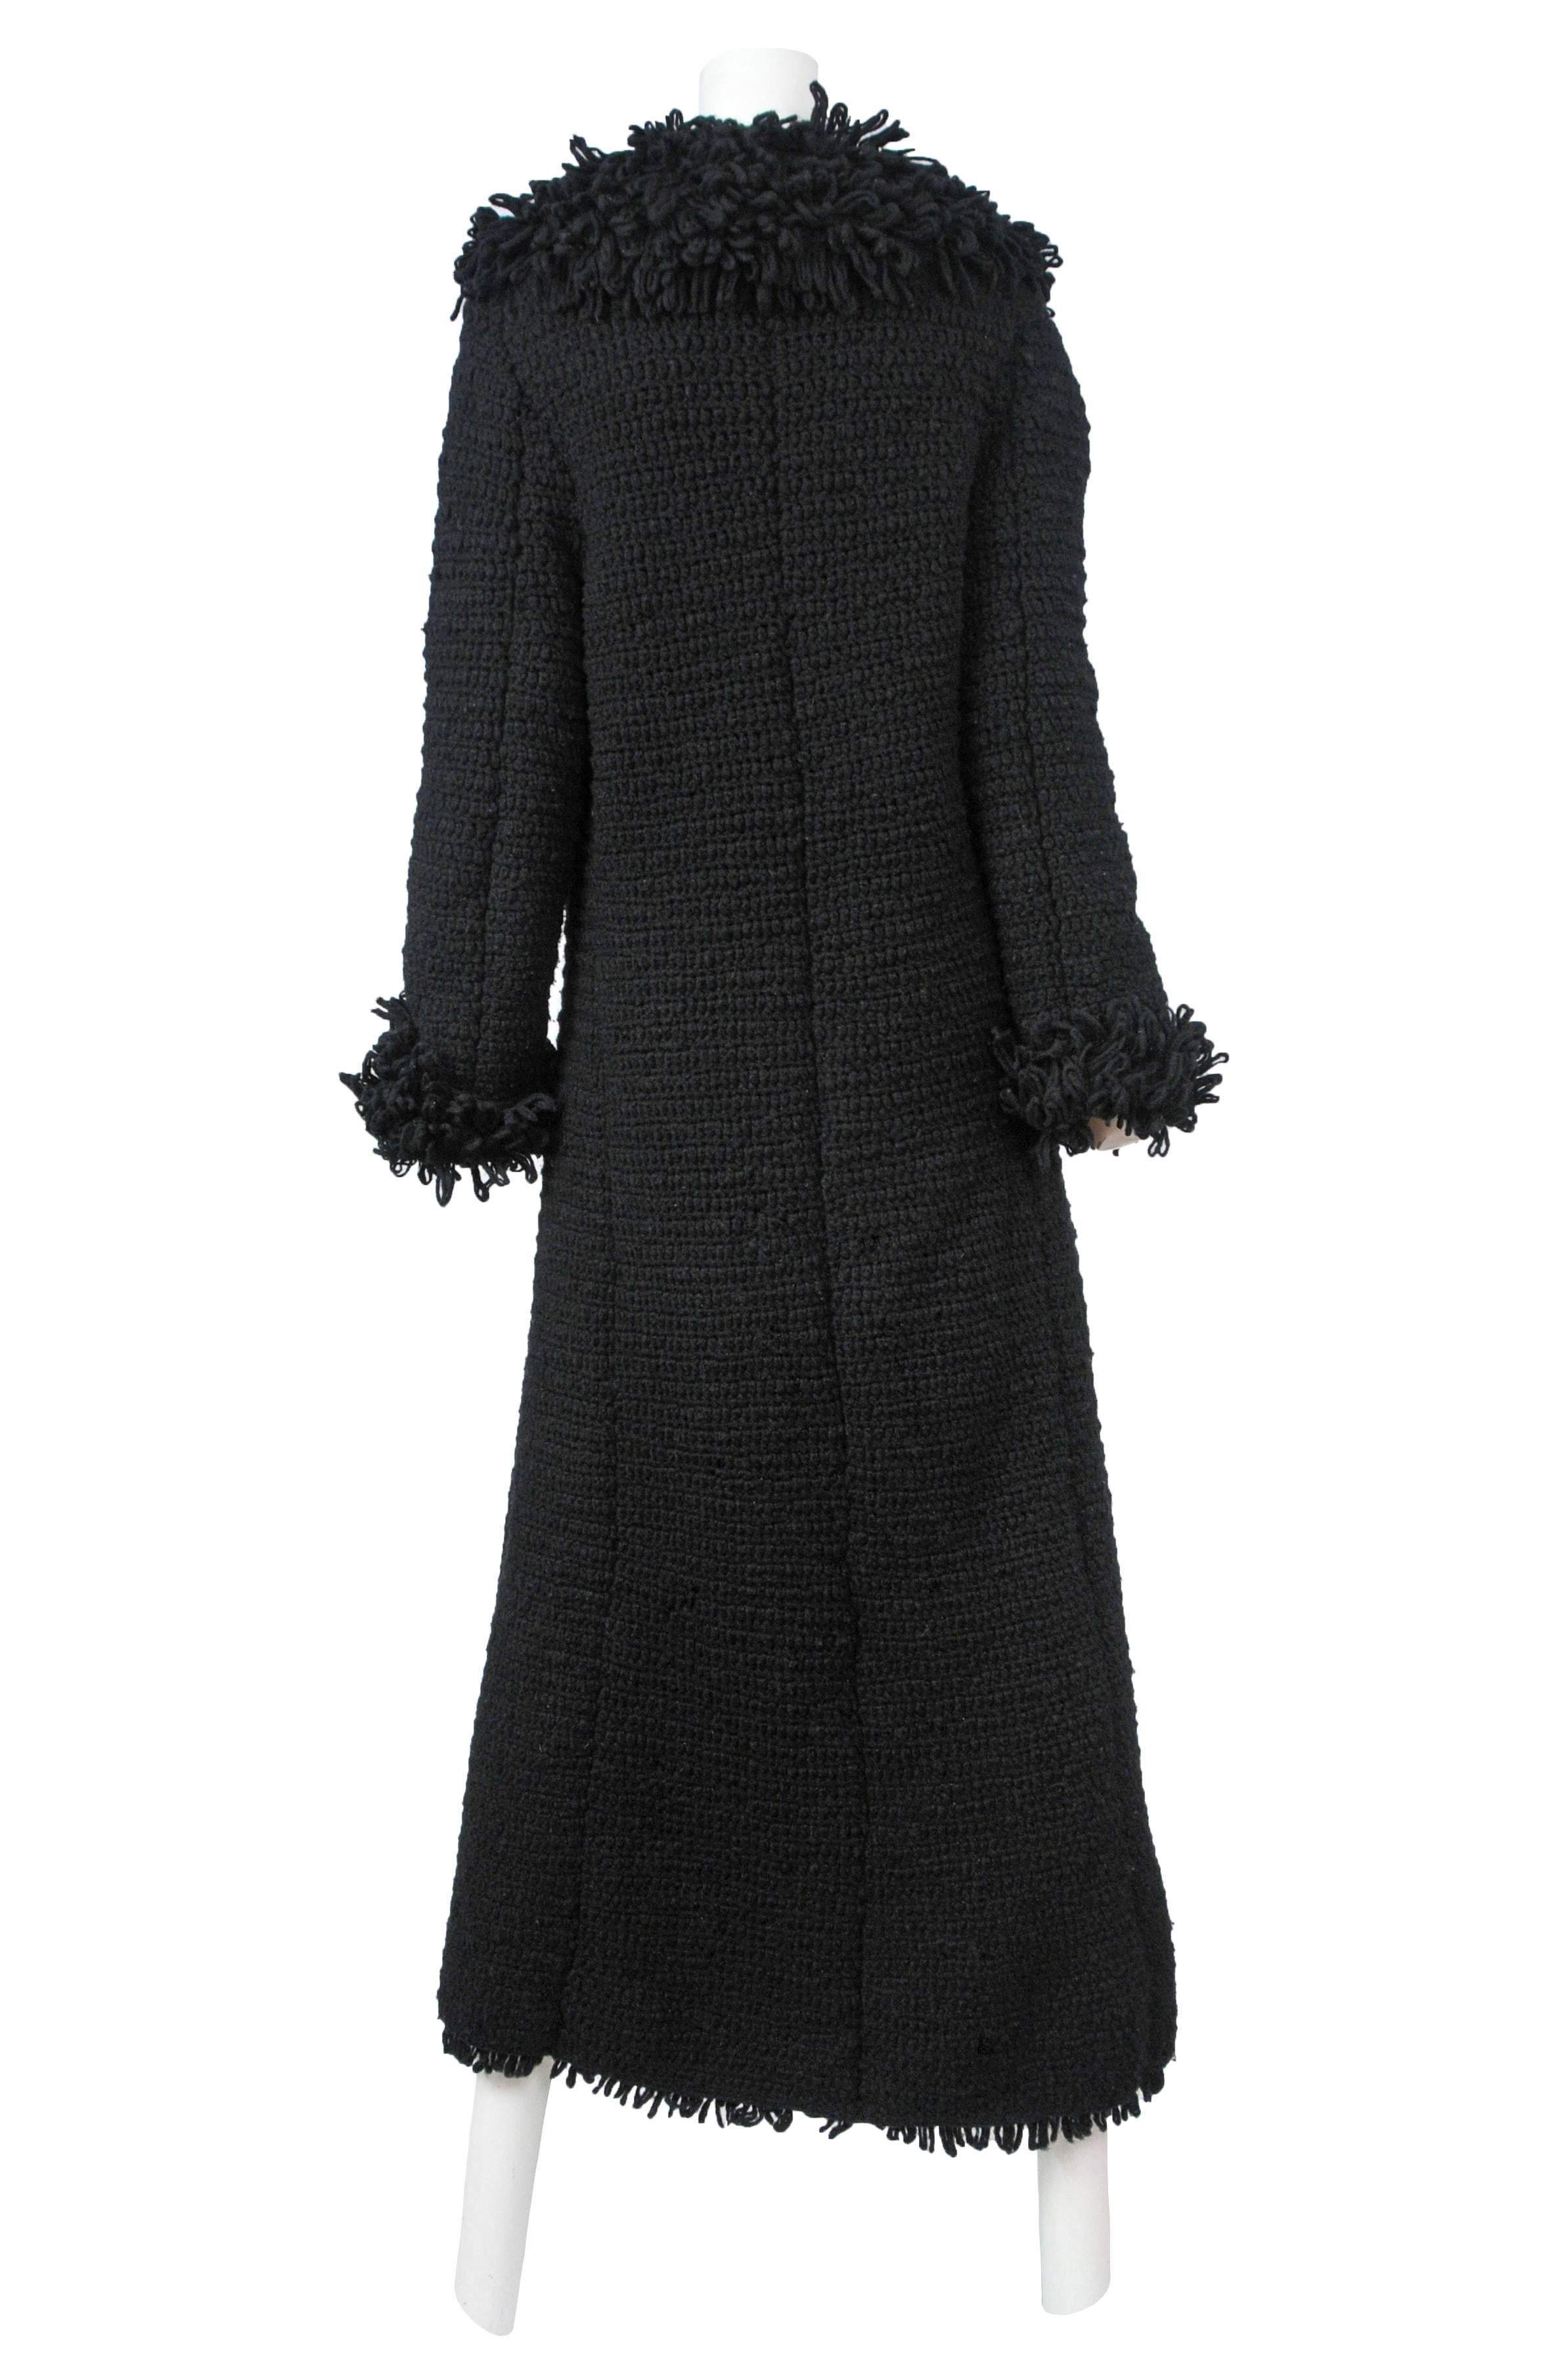 Vintage Yohji Yamamoto black shaggy wool duster coat.